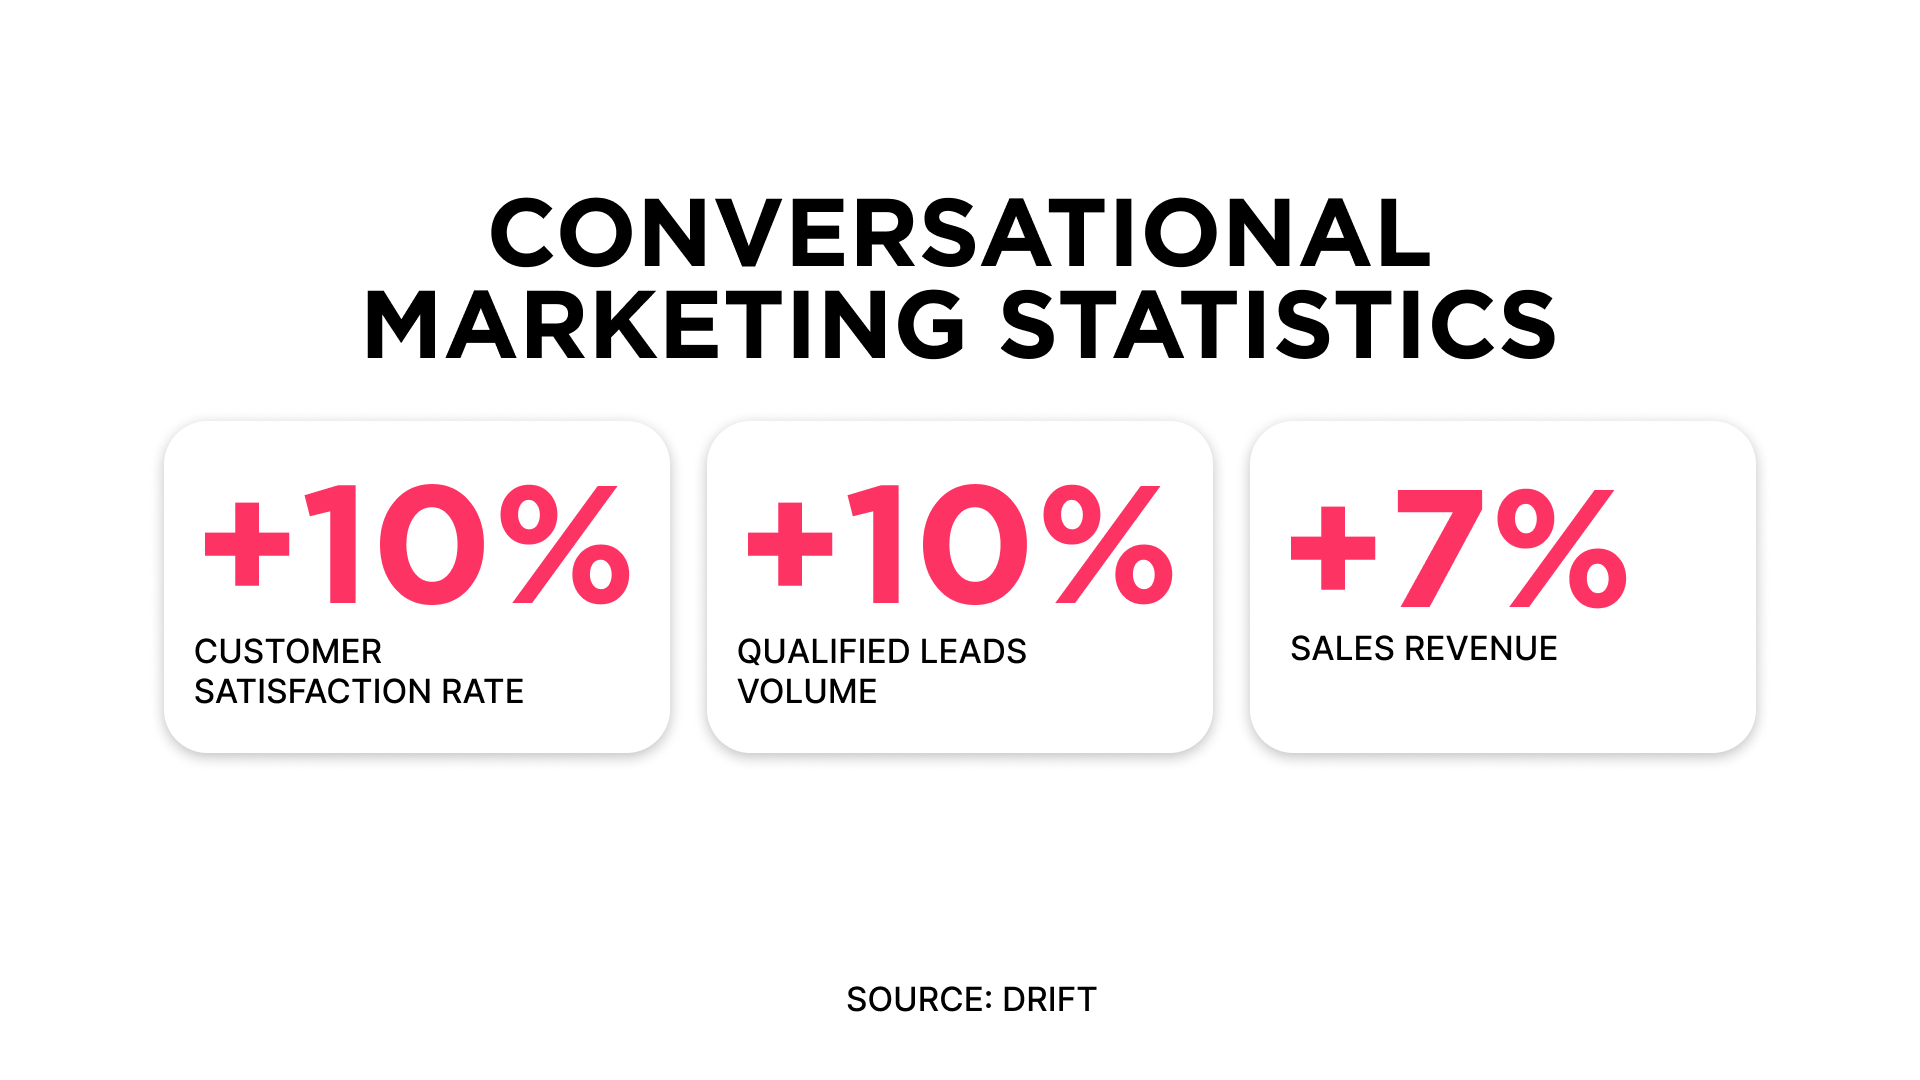 Conversational marketing statistics by Drift